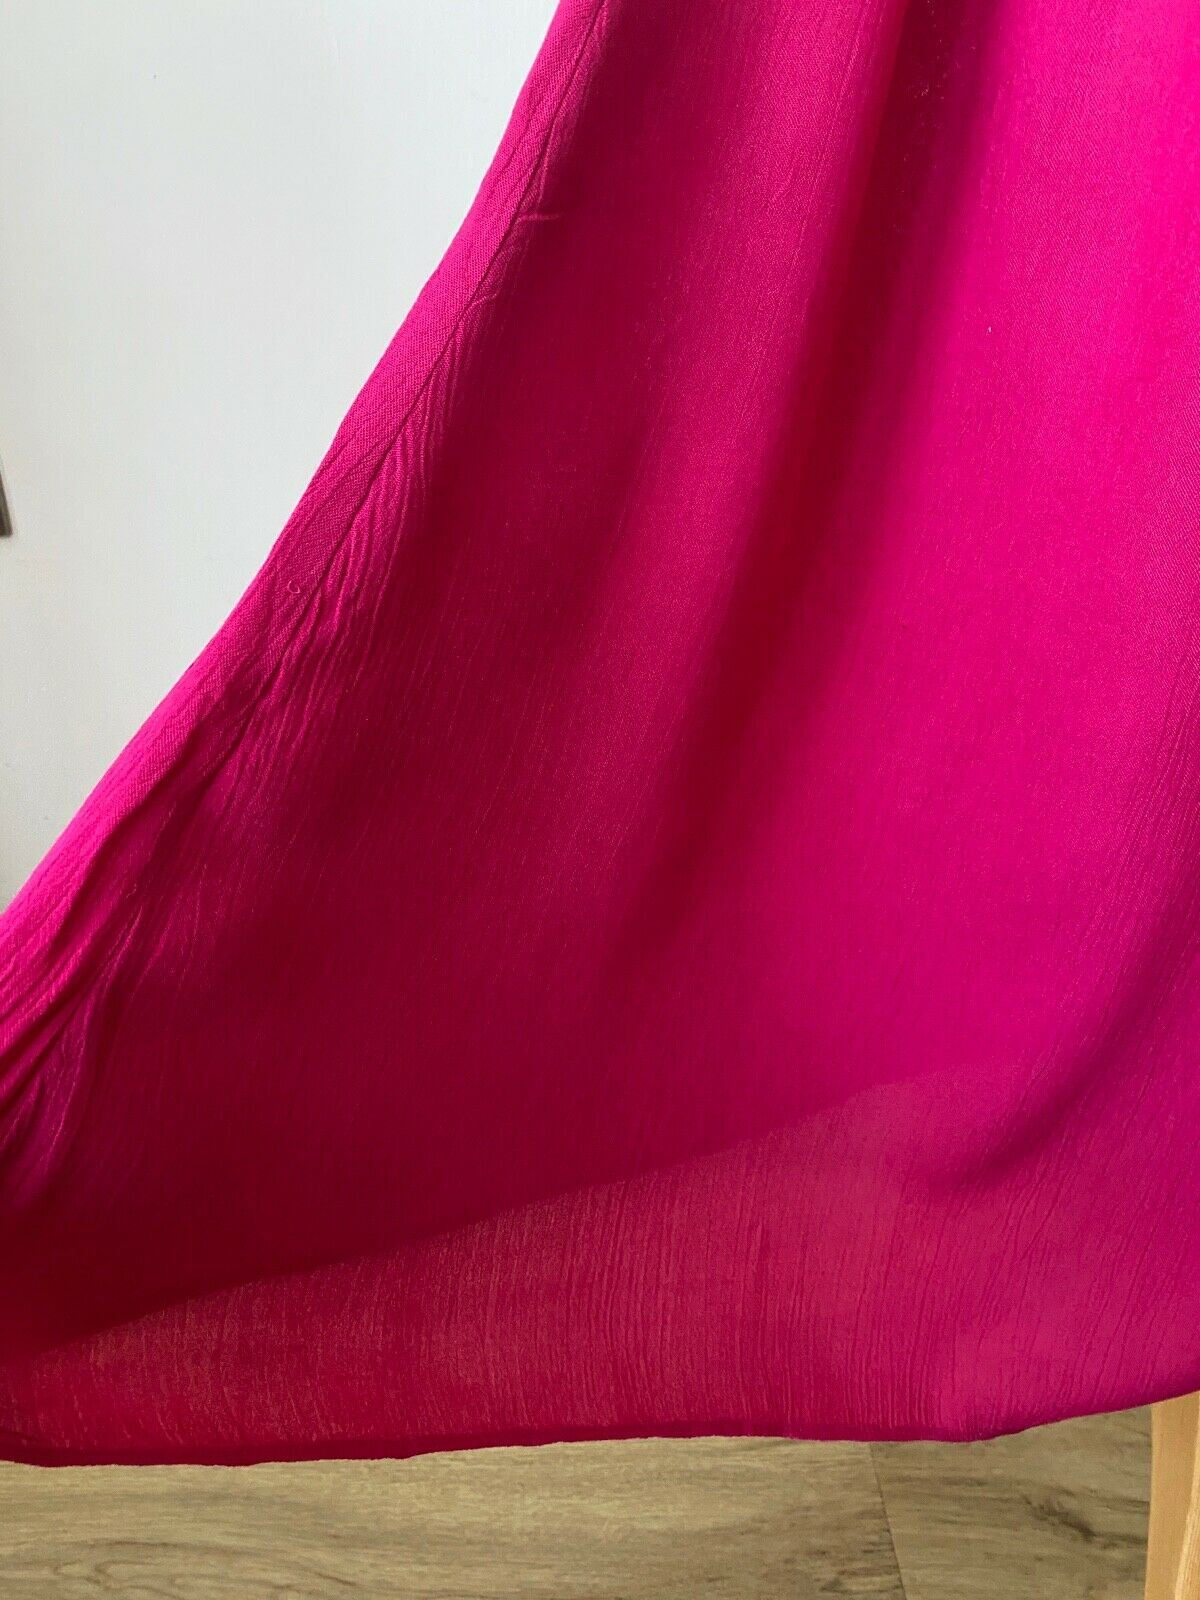 Pink Sleeveless Maxi Dress Size 14 - 16 Tie Straps Layered